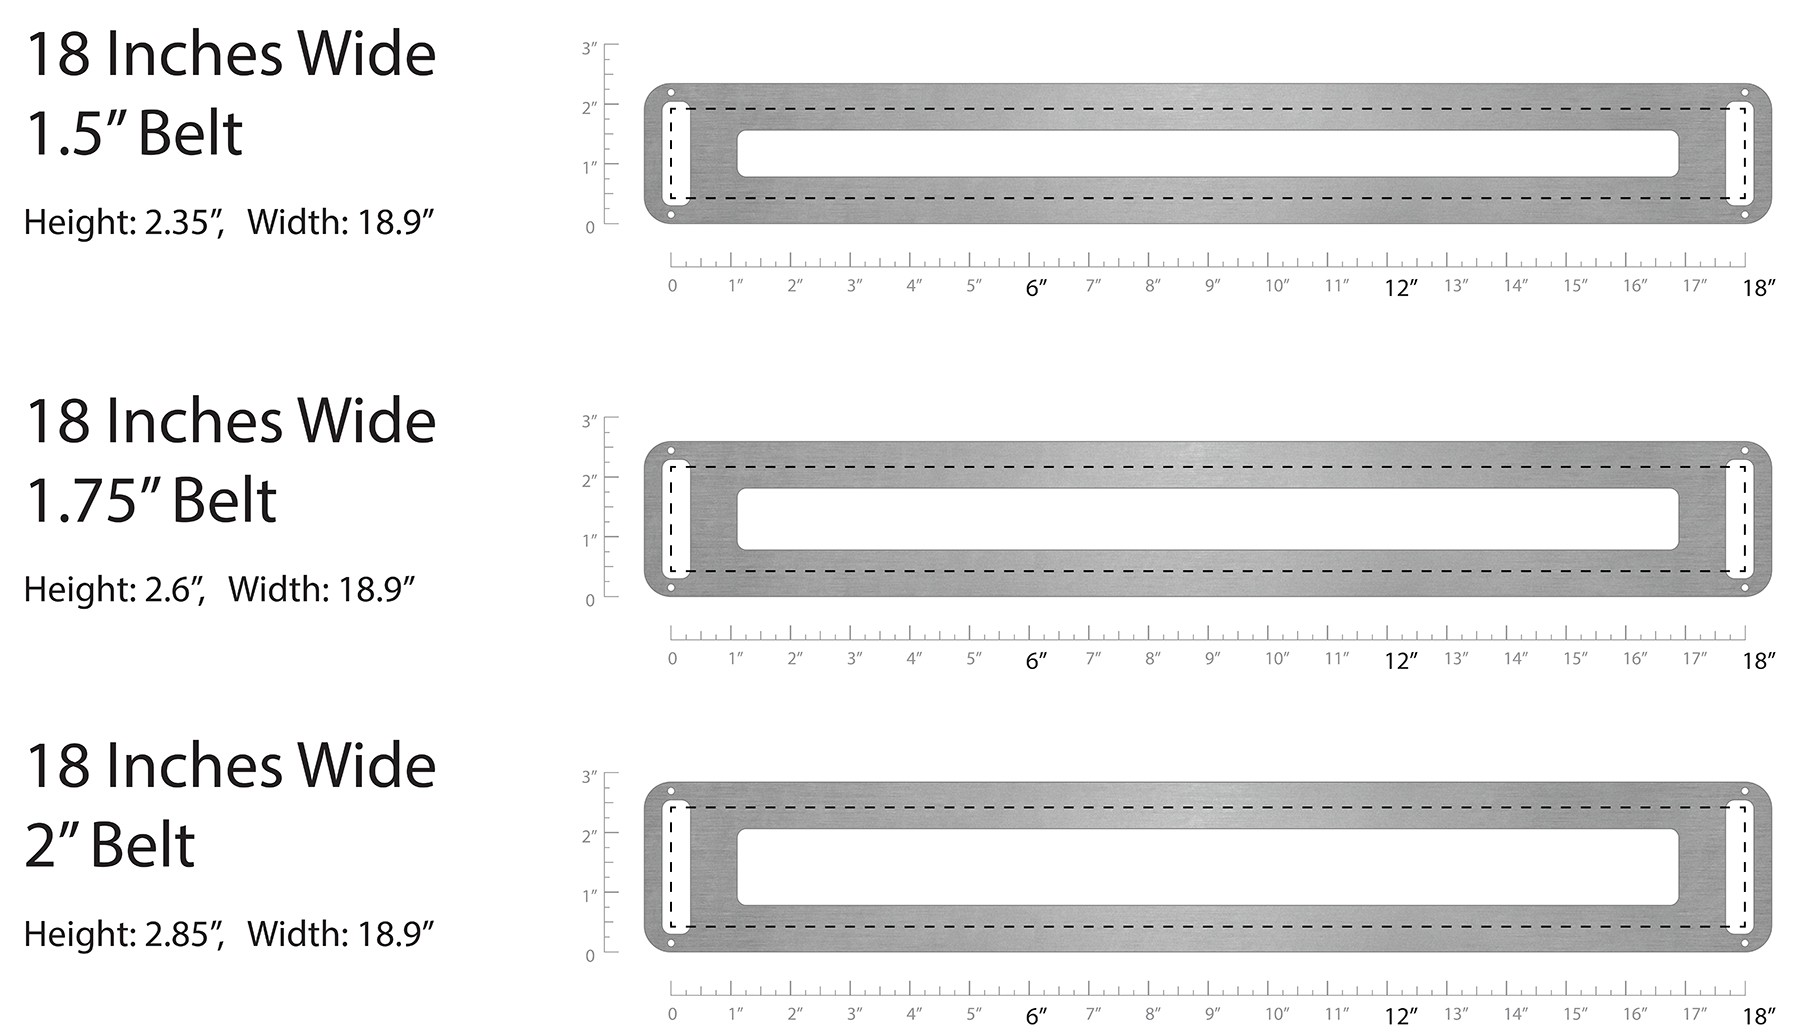 Custom Belt Display Header - Multiple Rows